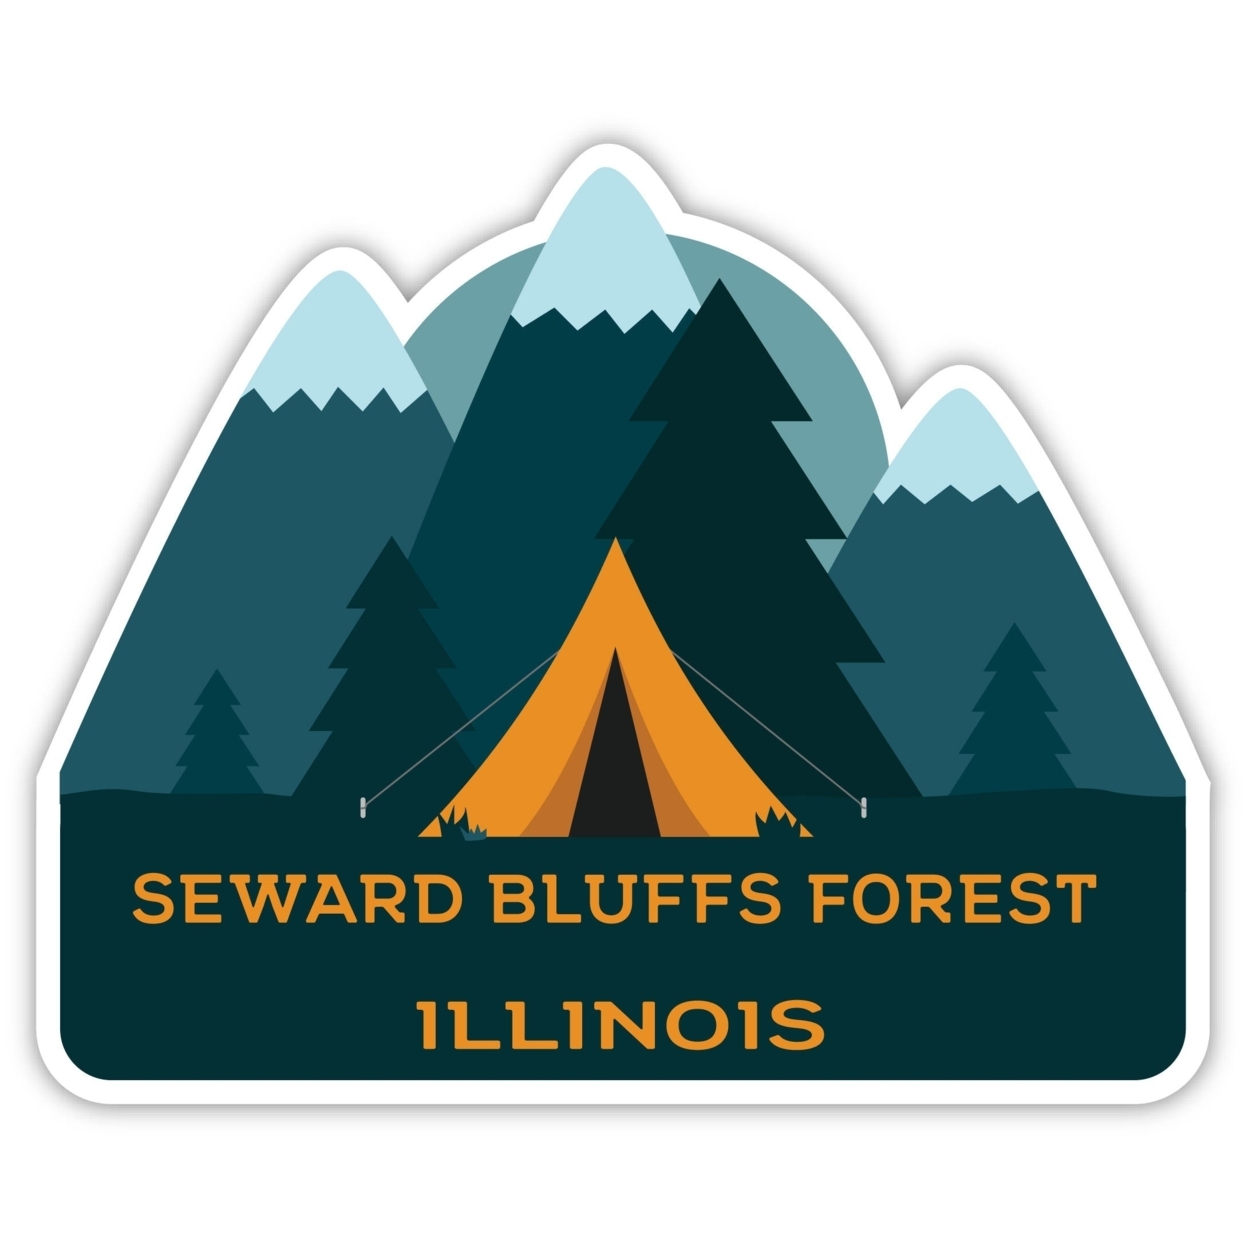 Seward Bluffs Forest Illinois Souvenir Decorative Stickers (Choose Theme And Size) - Single Unit, 4-Inch, Tent